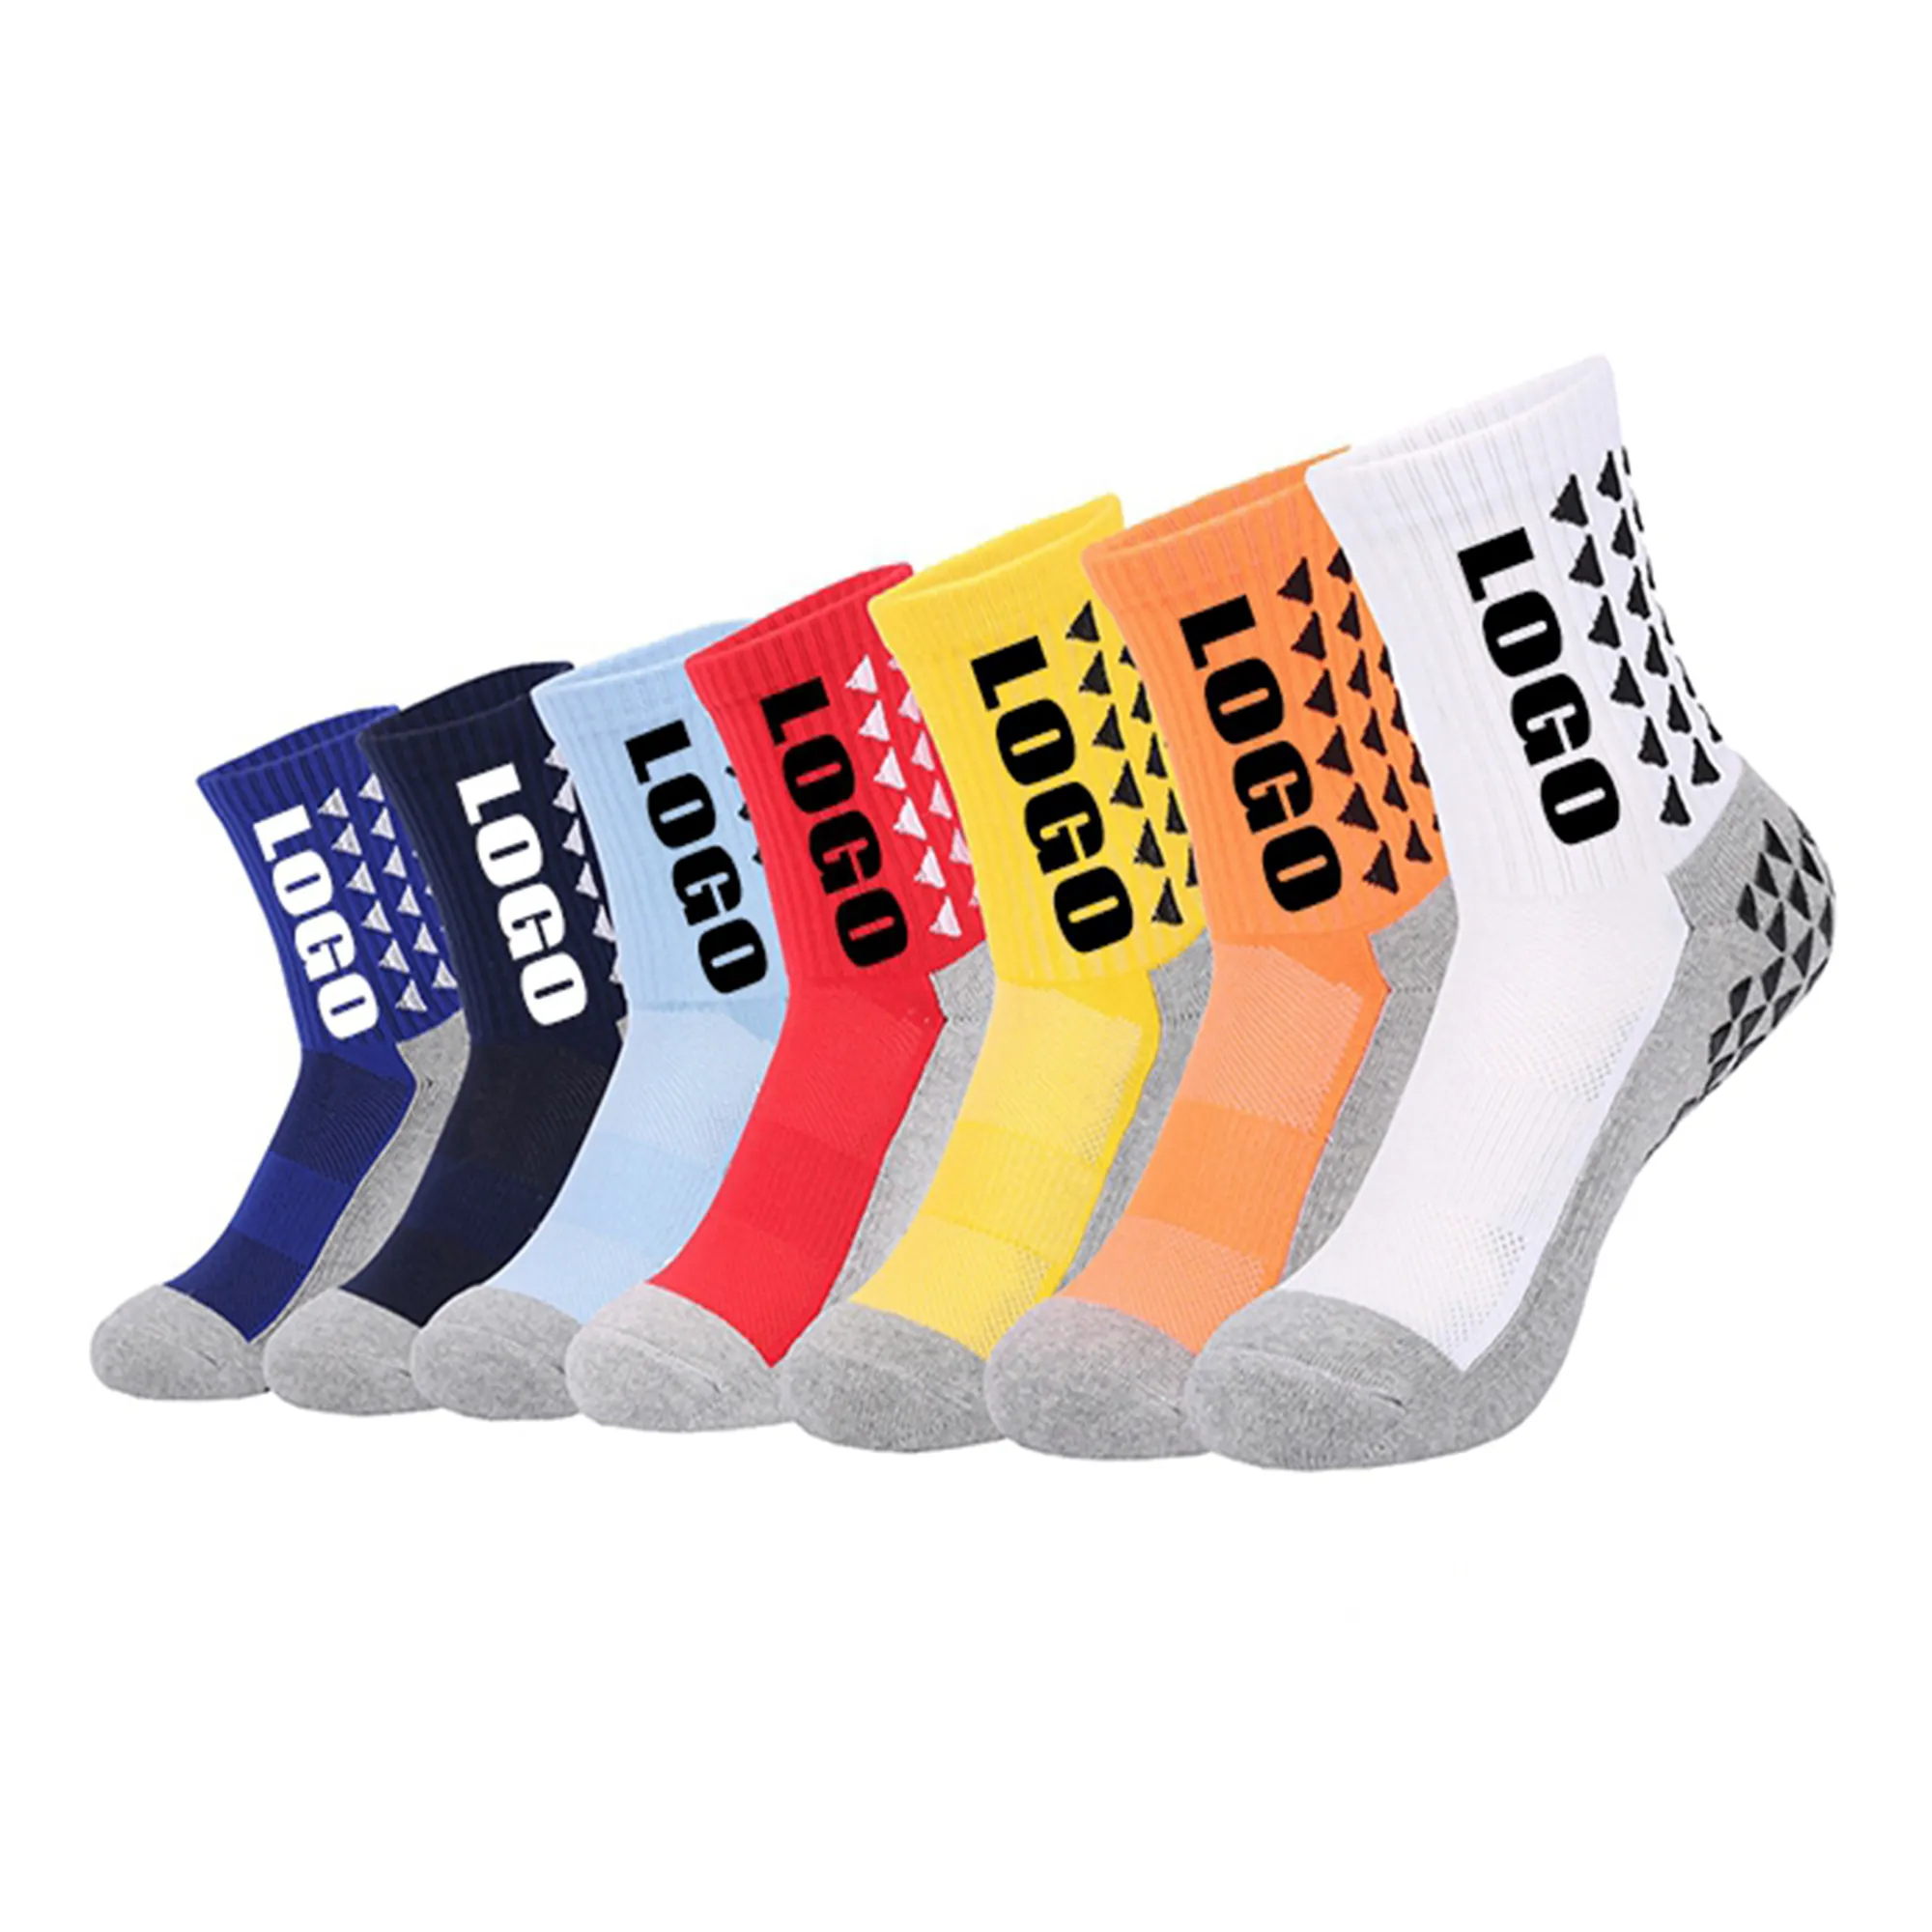 Wholesale Multi-Style Anti-Slip Sports Breathable Crew Athletic Gripper Football Soccer Socks